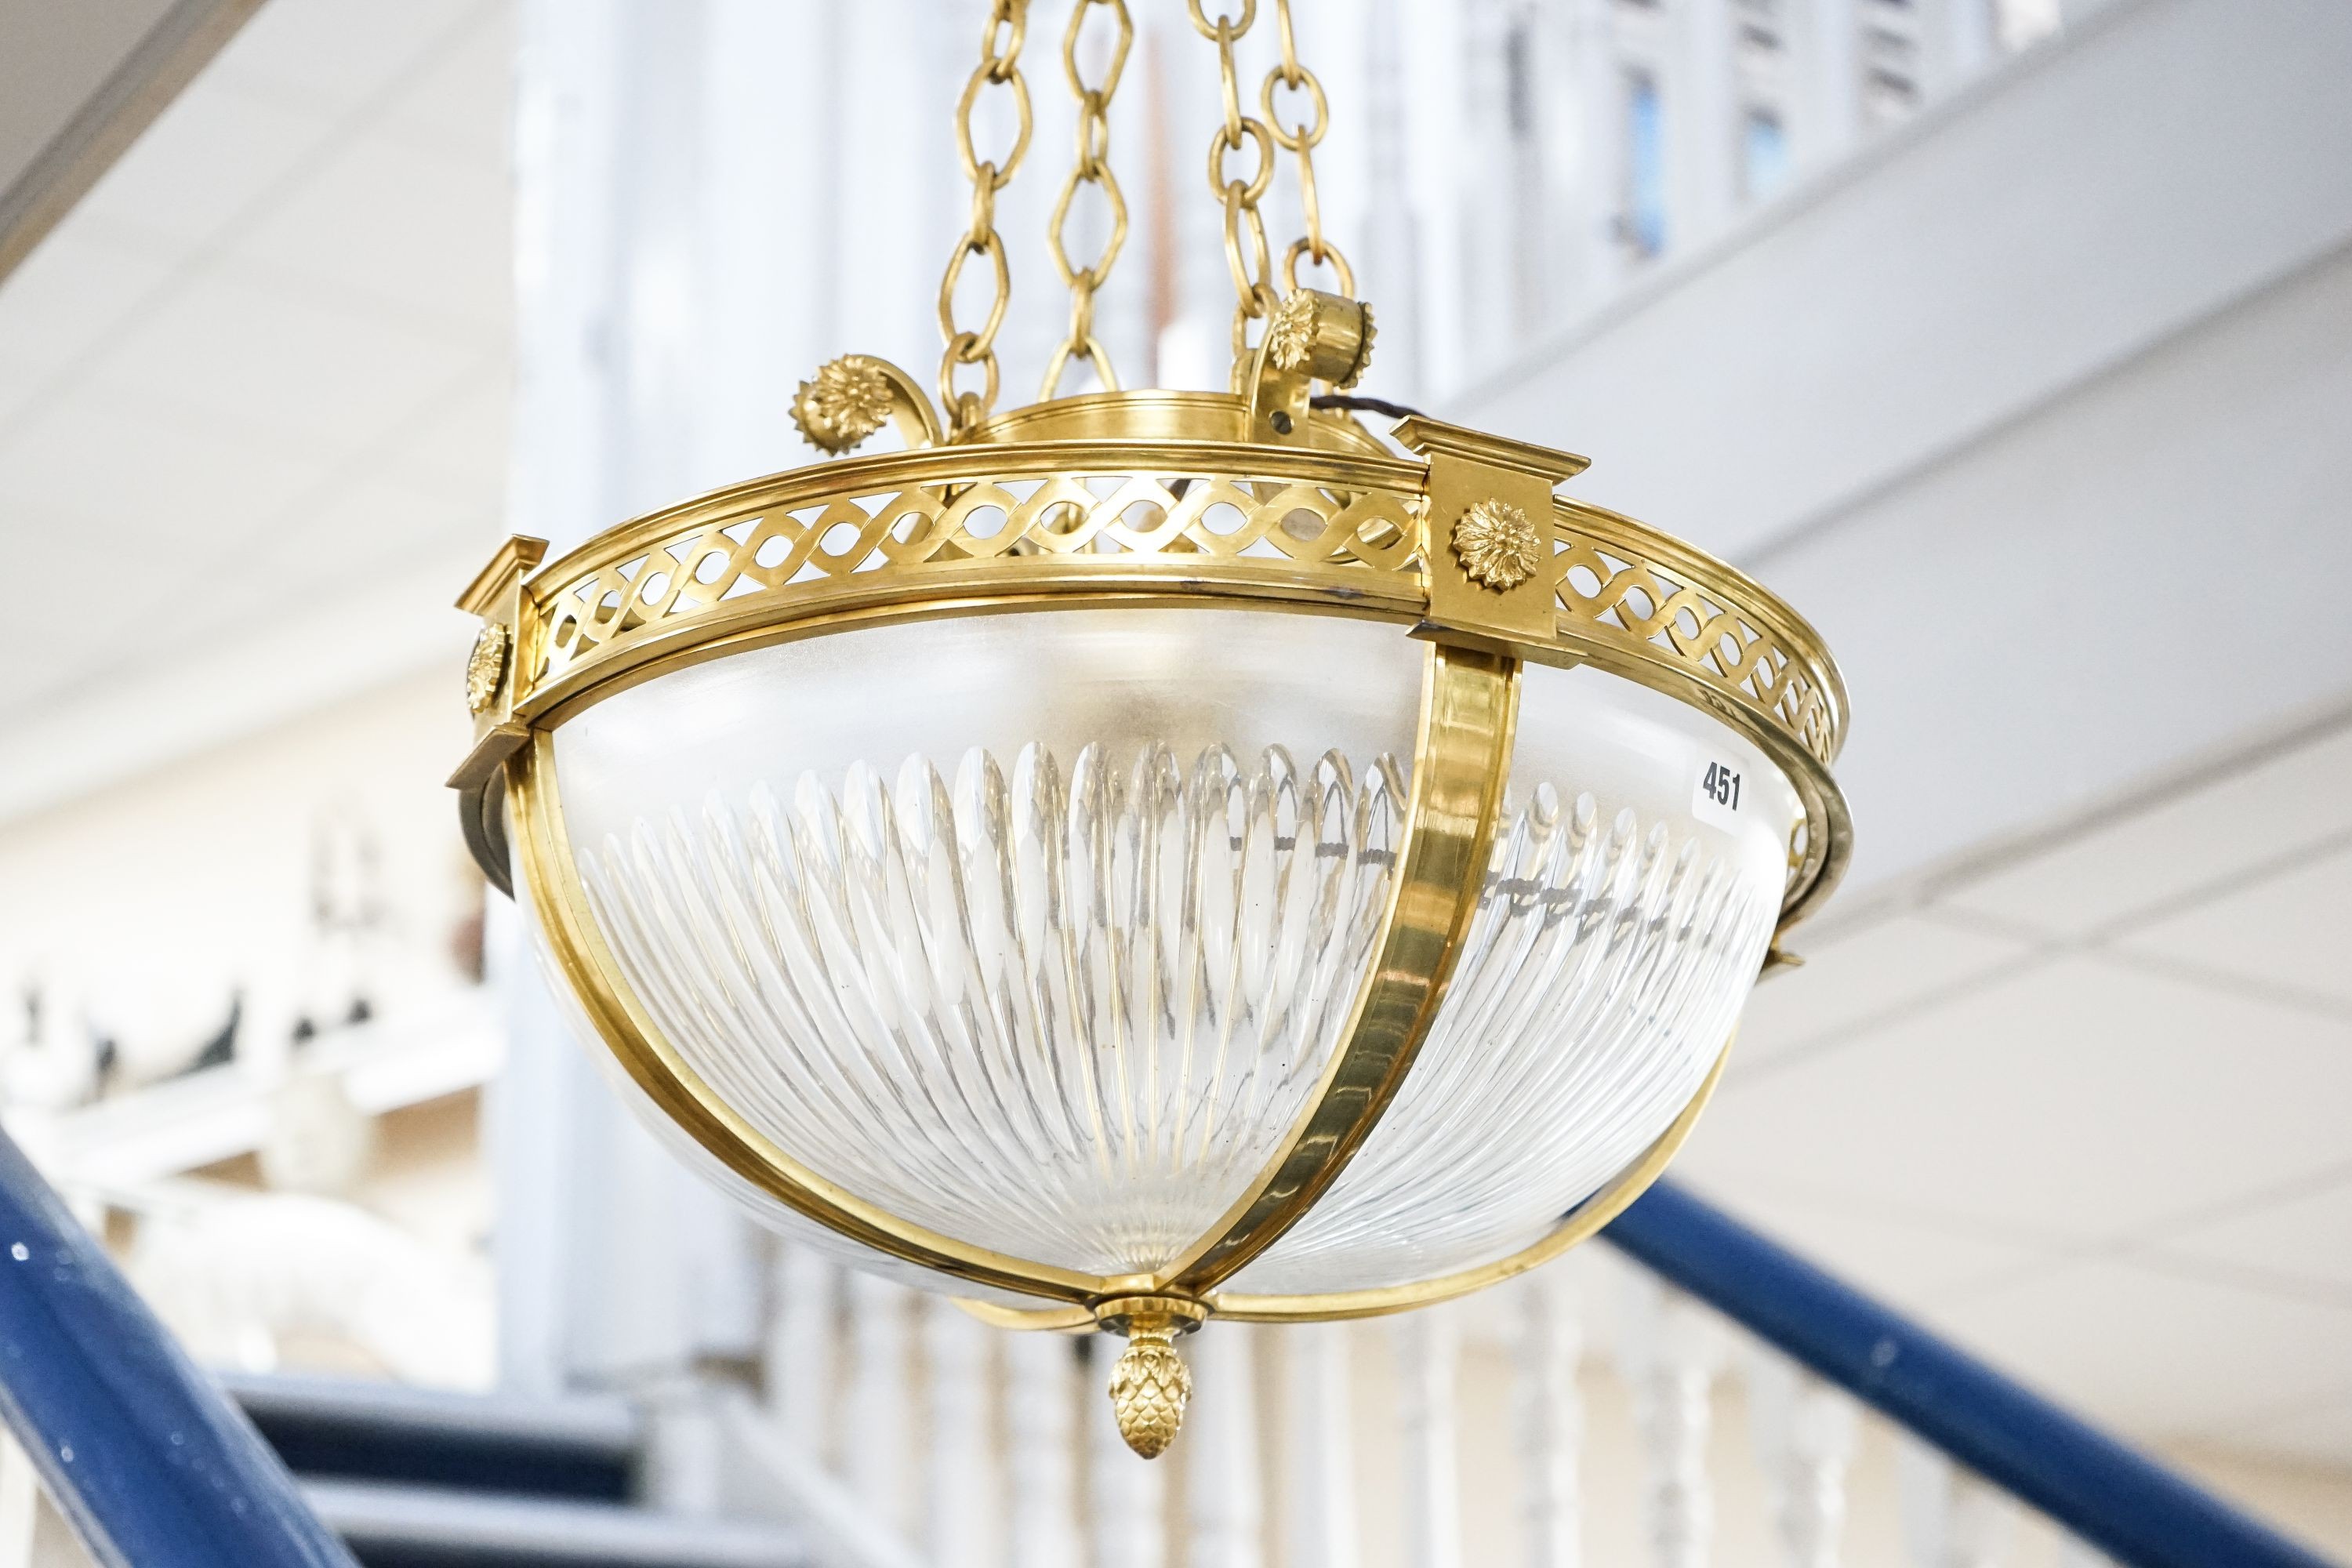 An Edwardian neoclassical cut glass and brass plafonnier ceiling light, 41 cm wide